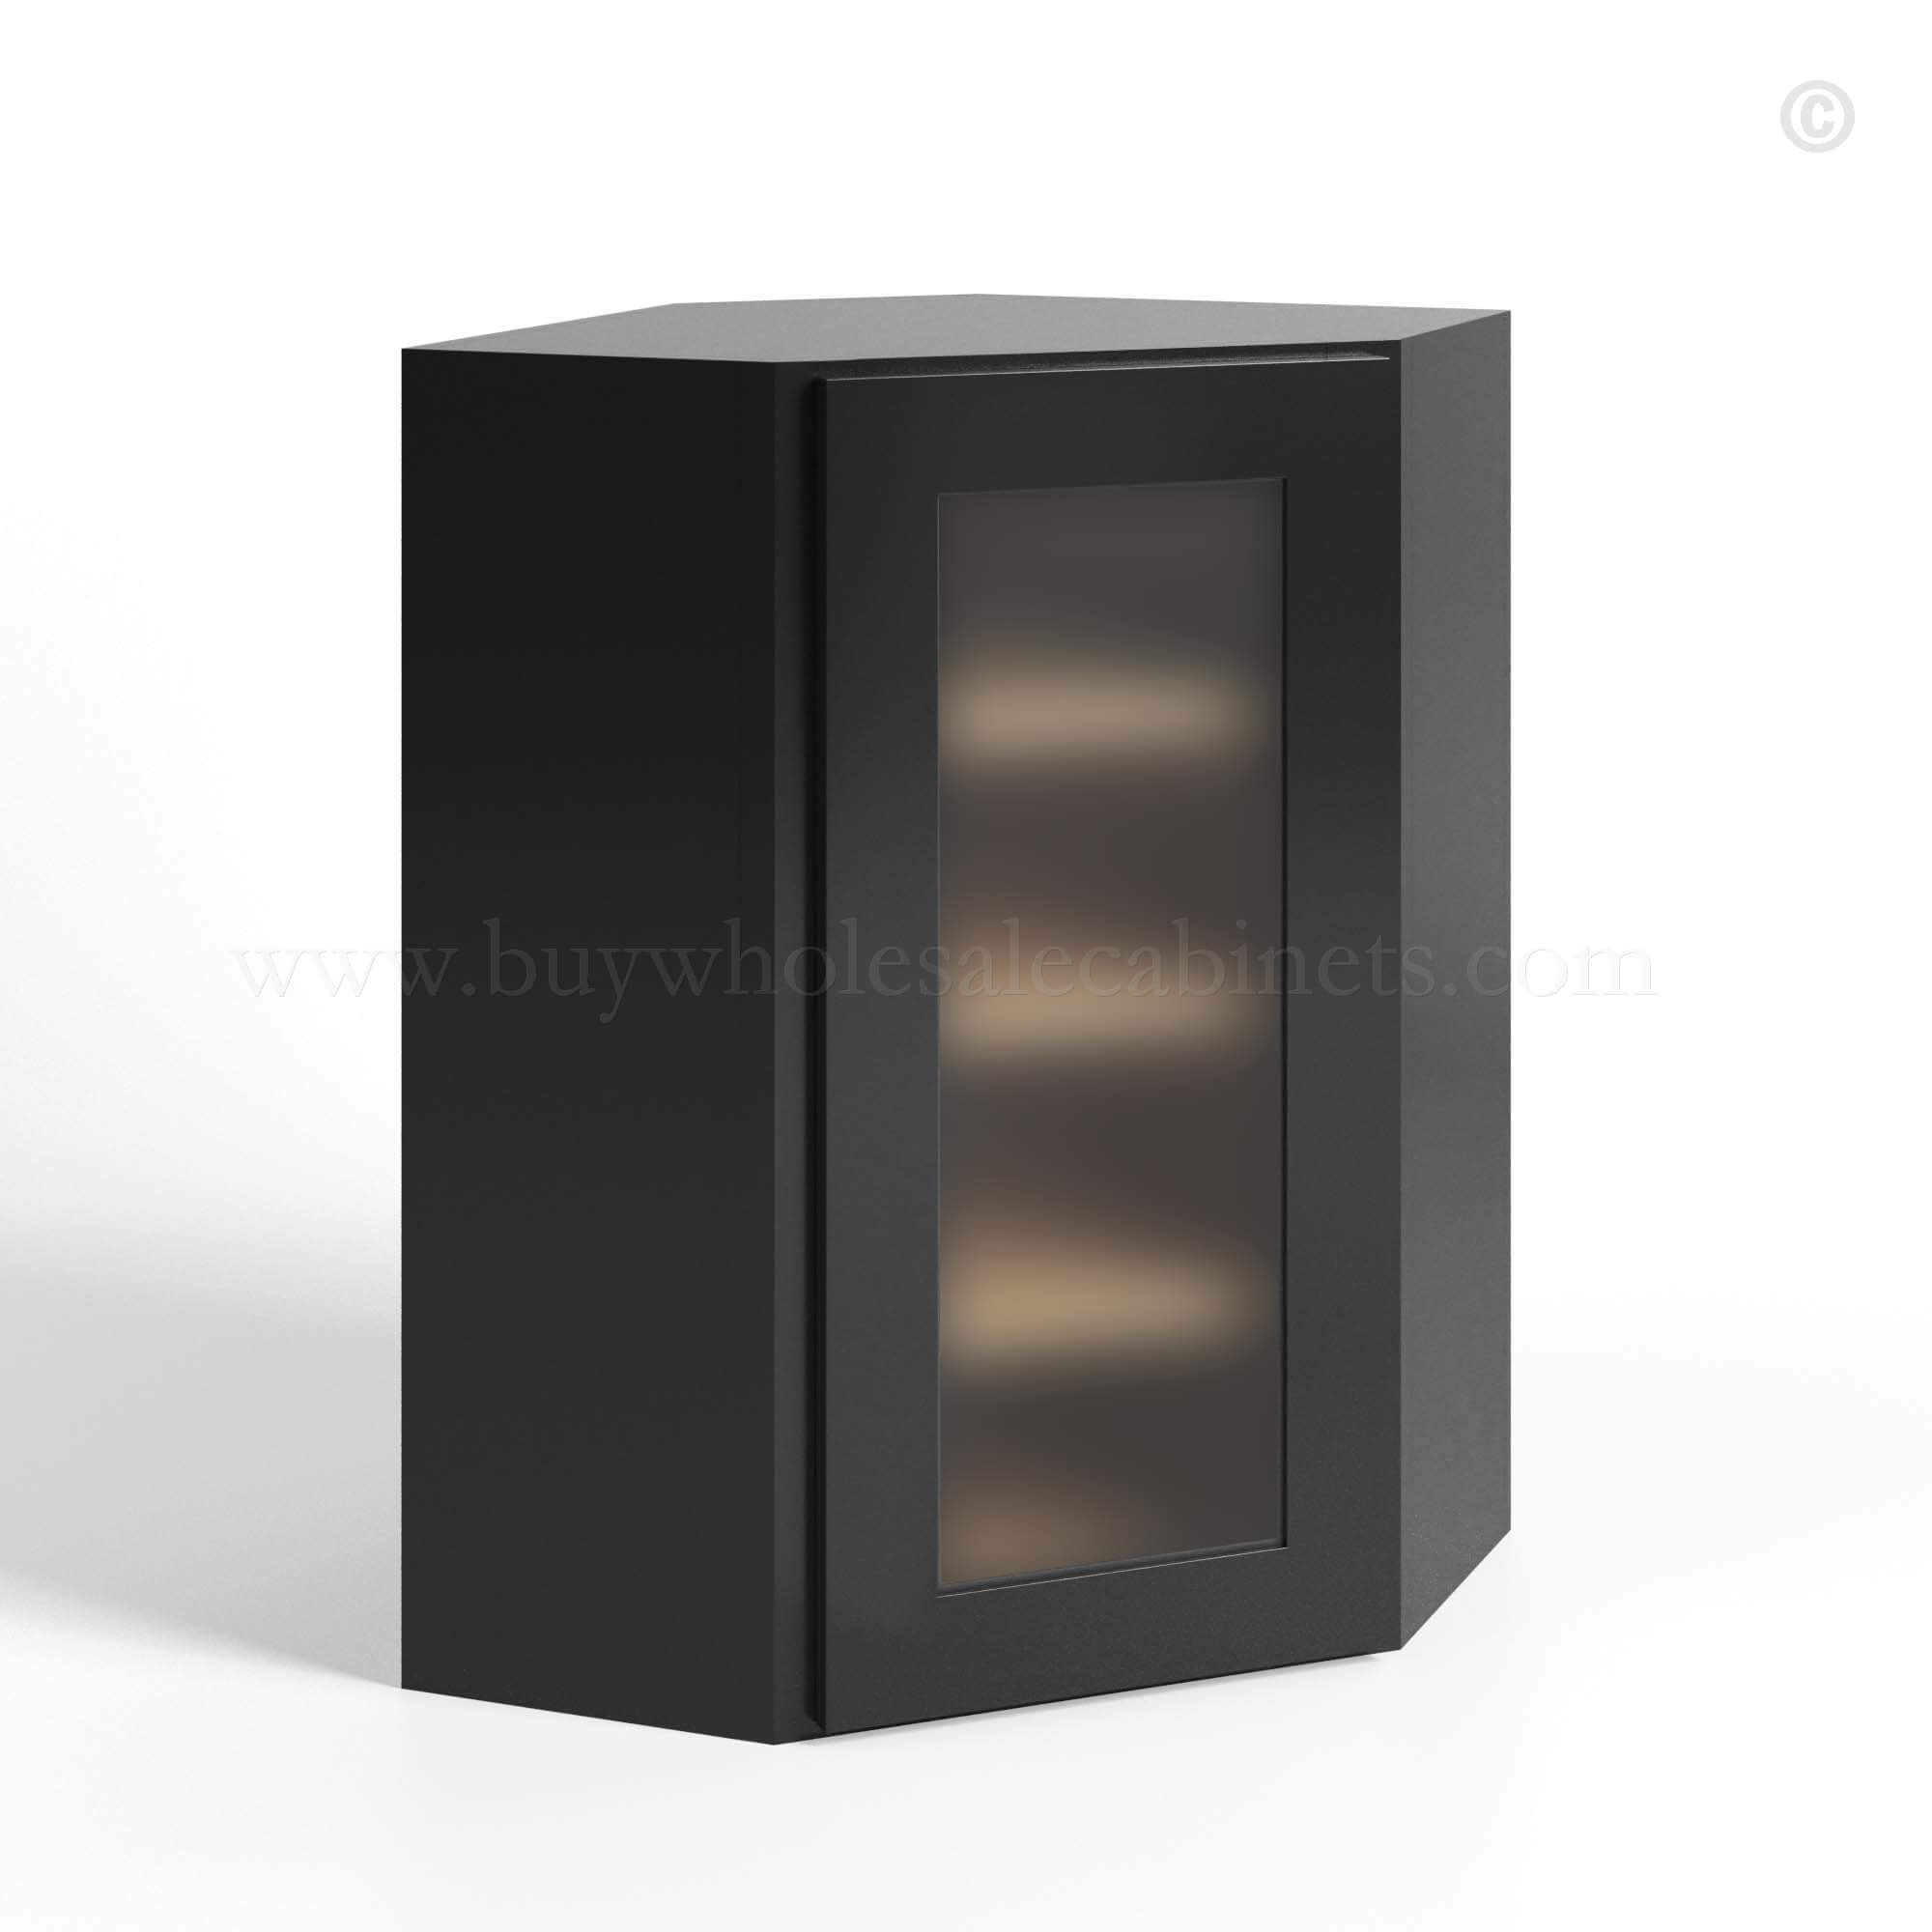 Black Shaker Wall Diagonal Glass Corner, rta cabinets, wholesale cabinets